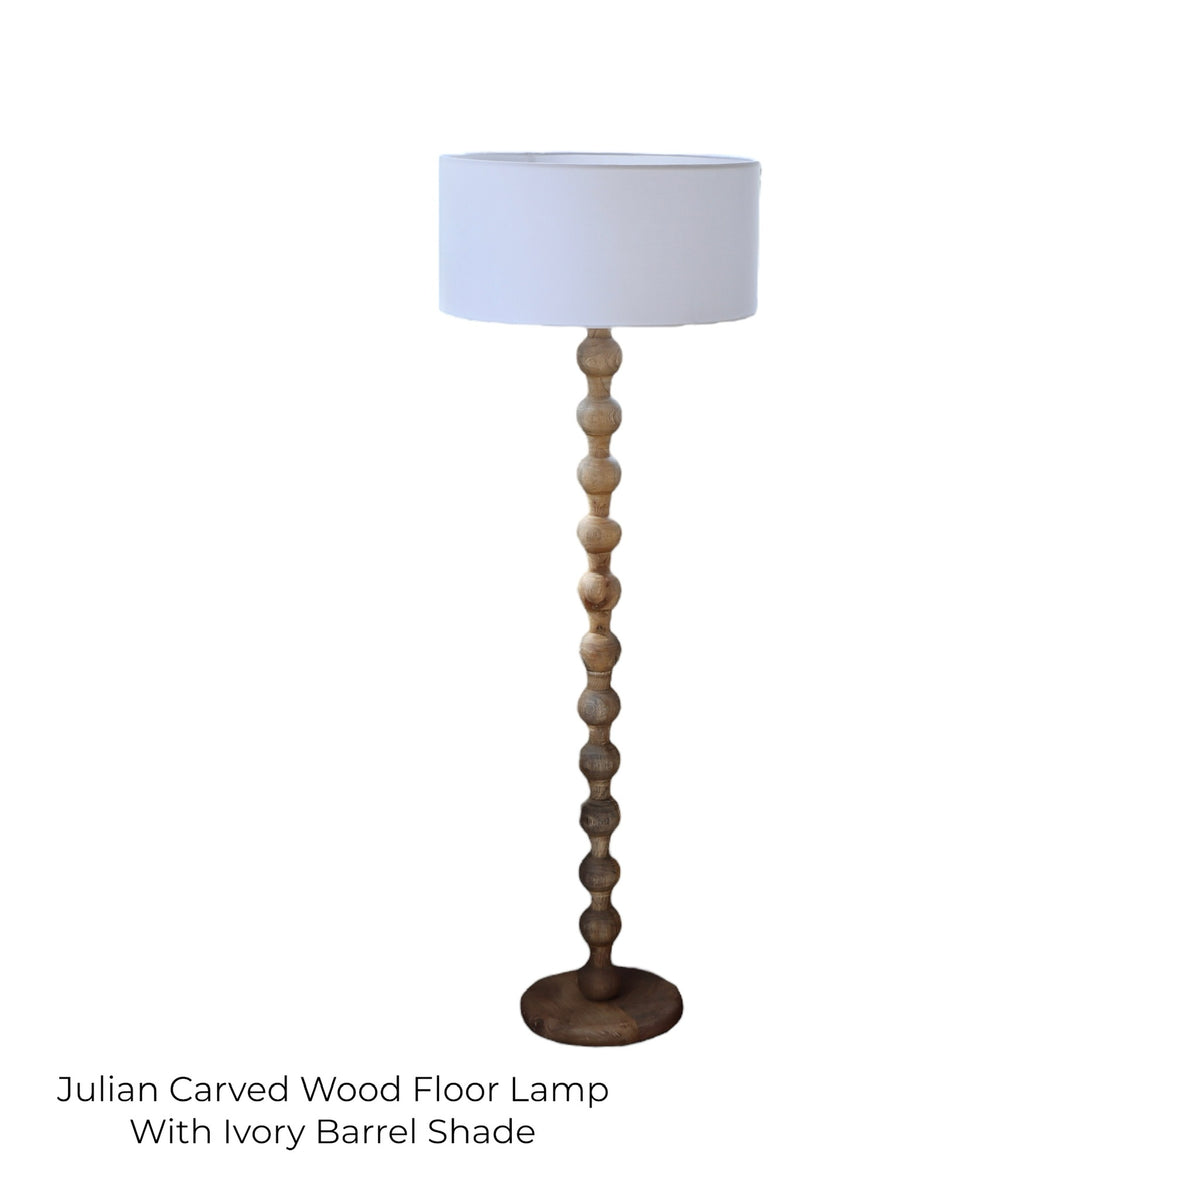 Julian Carved Wood Floor Lamp With Ivory Barrel Shade - Holistic Habitat 